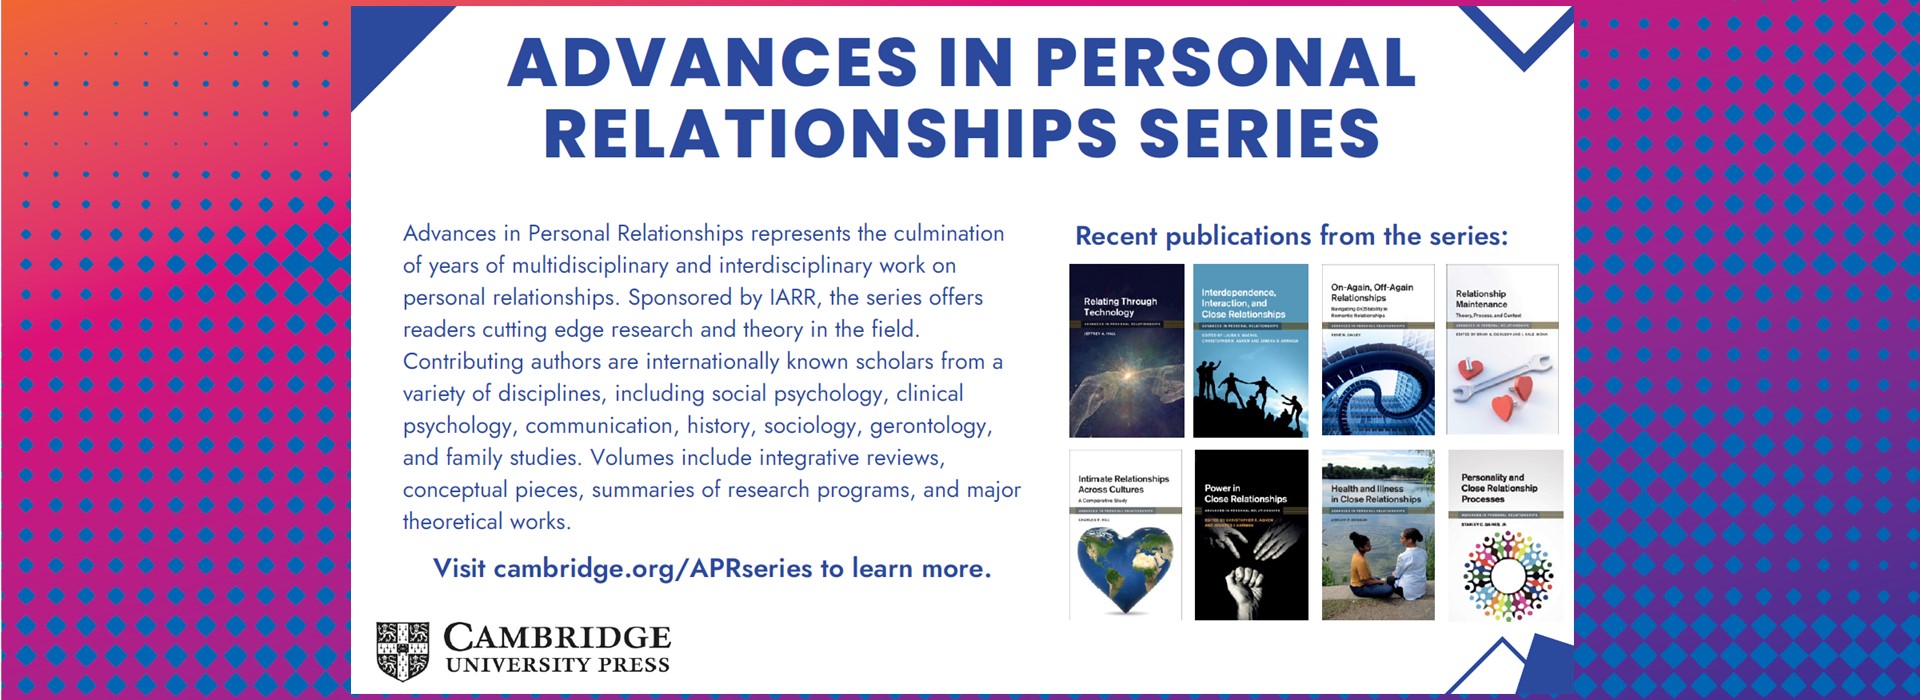 International Association for Relationship Research